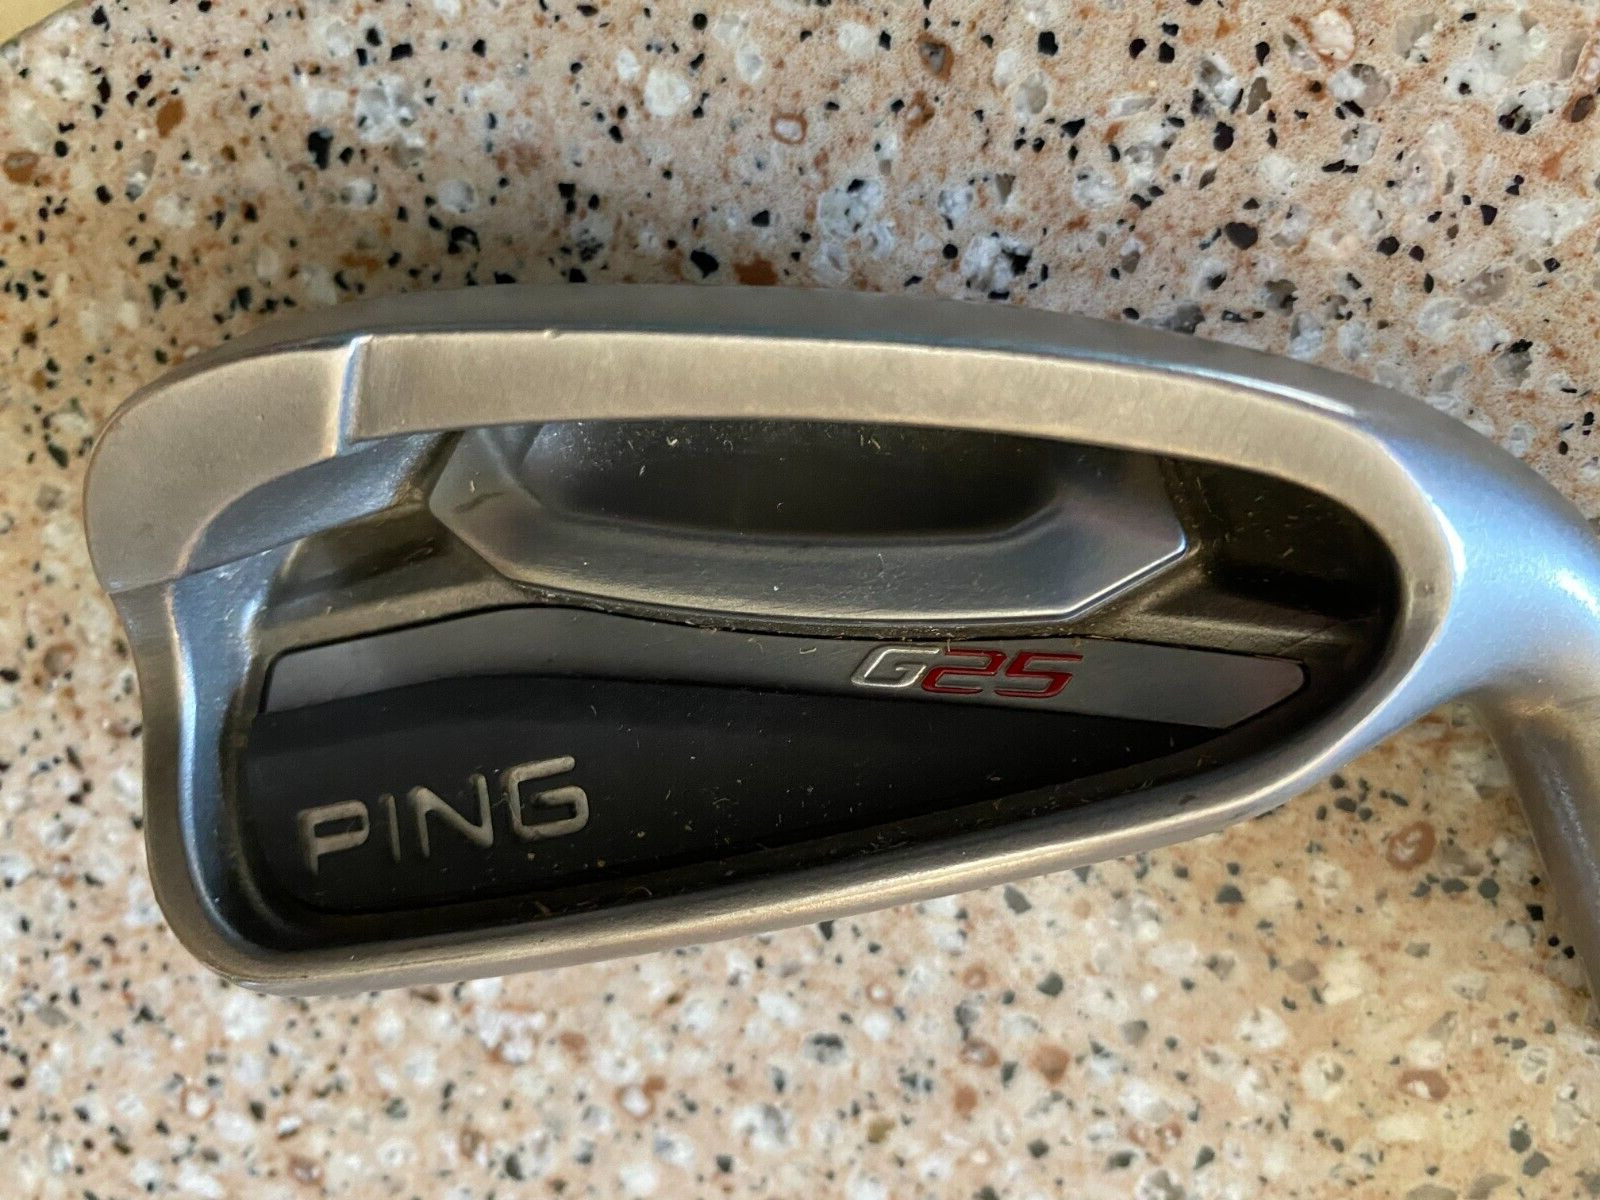 PING G 25 4 iron, white dot, +1 length, stiff shaft, mid-size grip